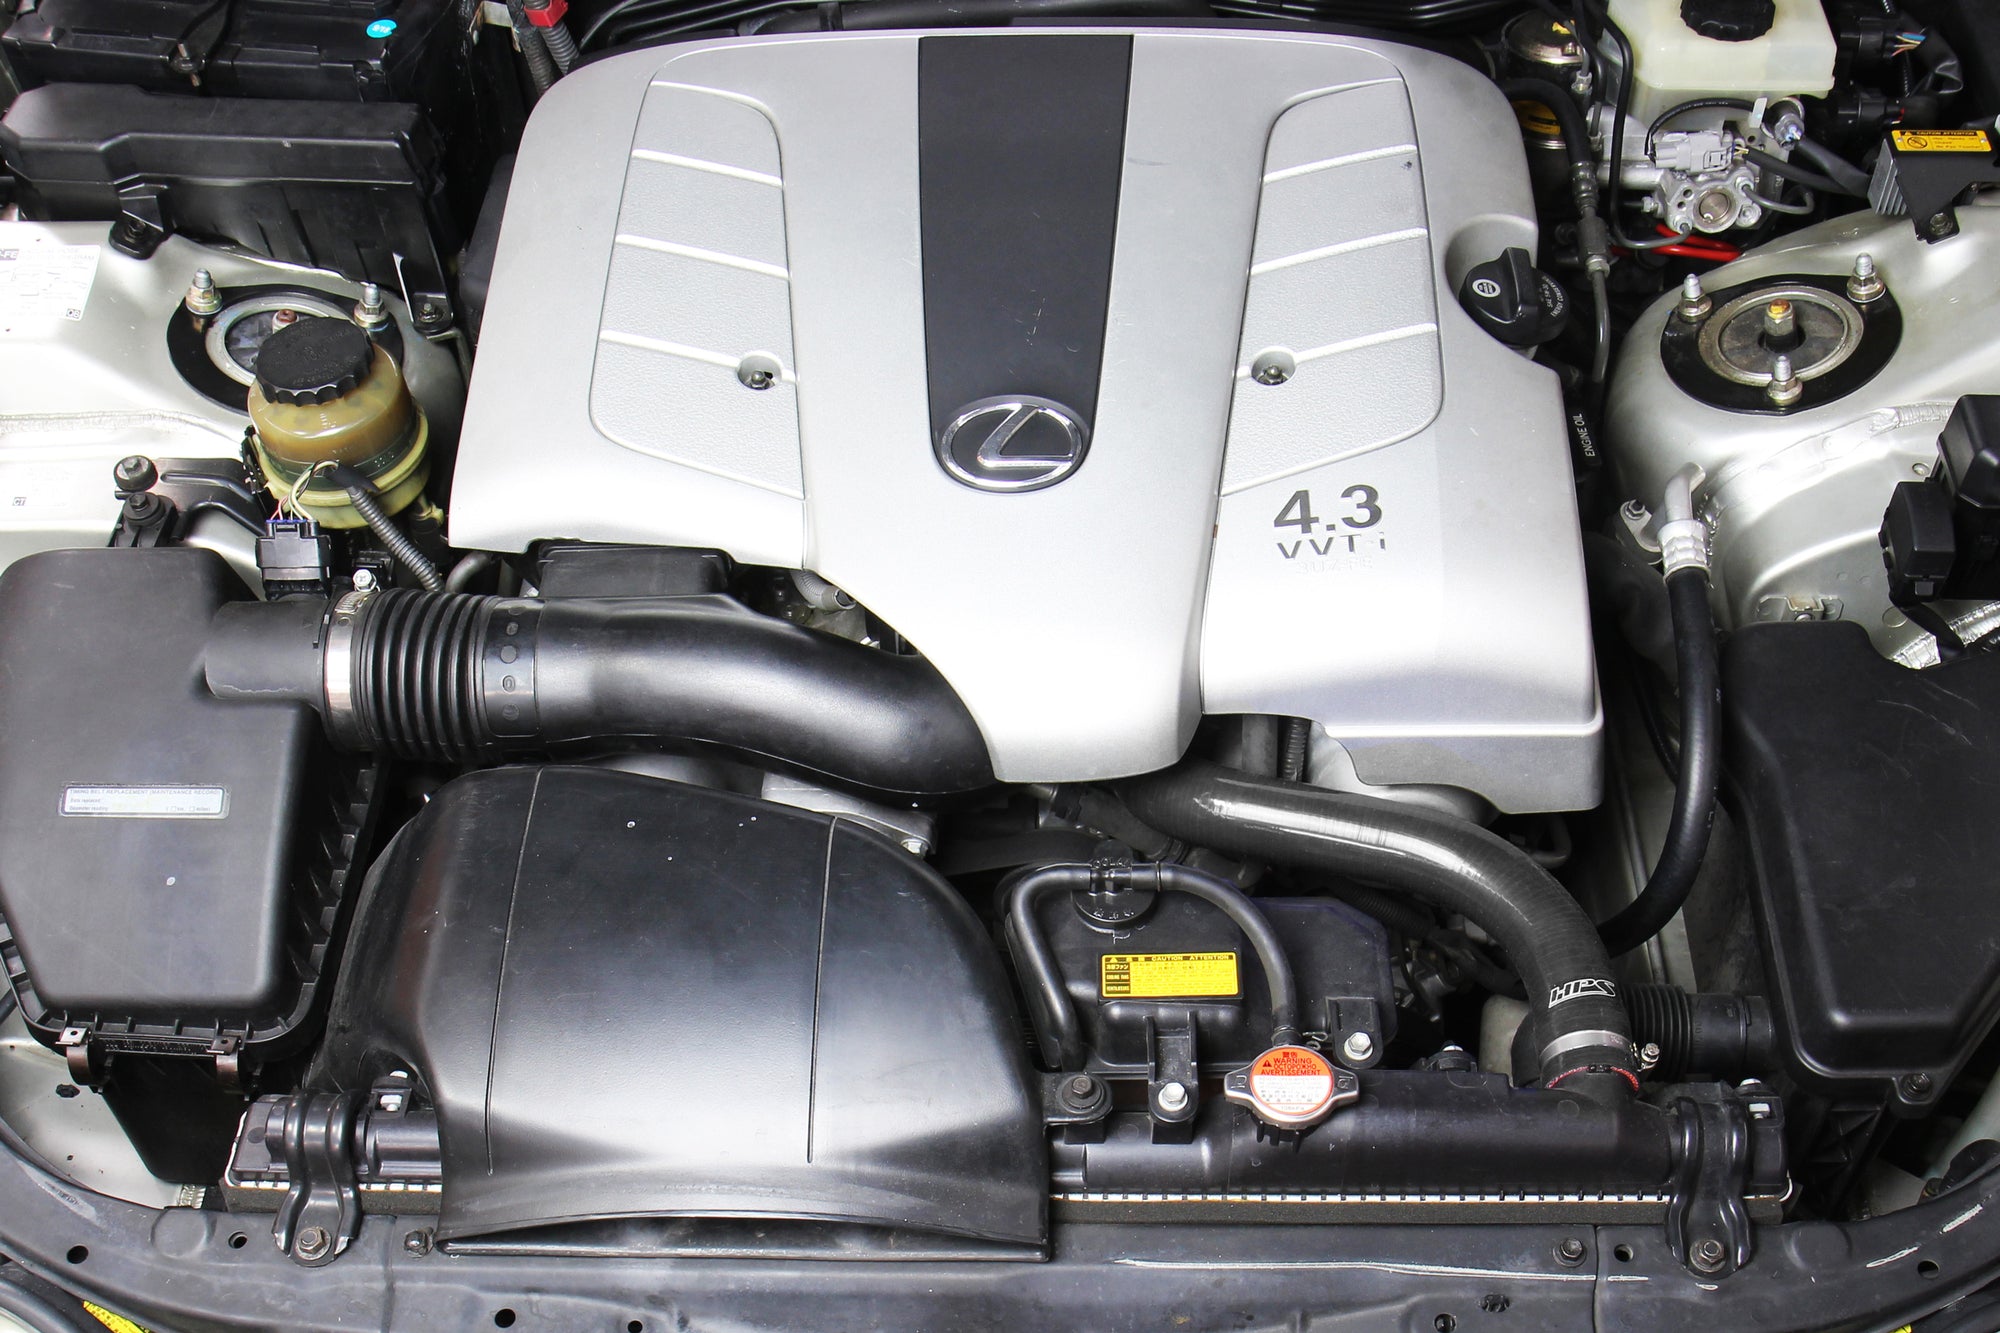 HPS Black Silicone Radiator Coolant Hose Kit Installed Lexus 2001-2005 GS430 4.3L V8